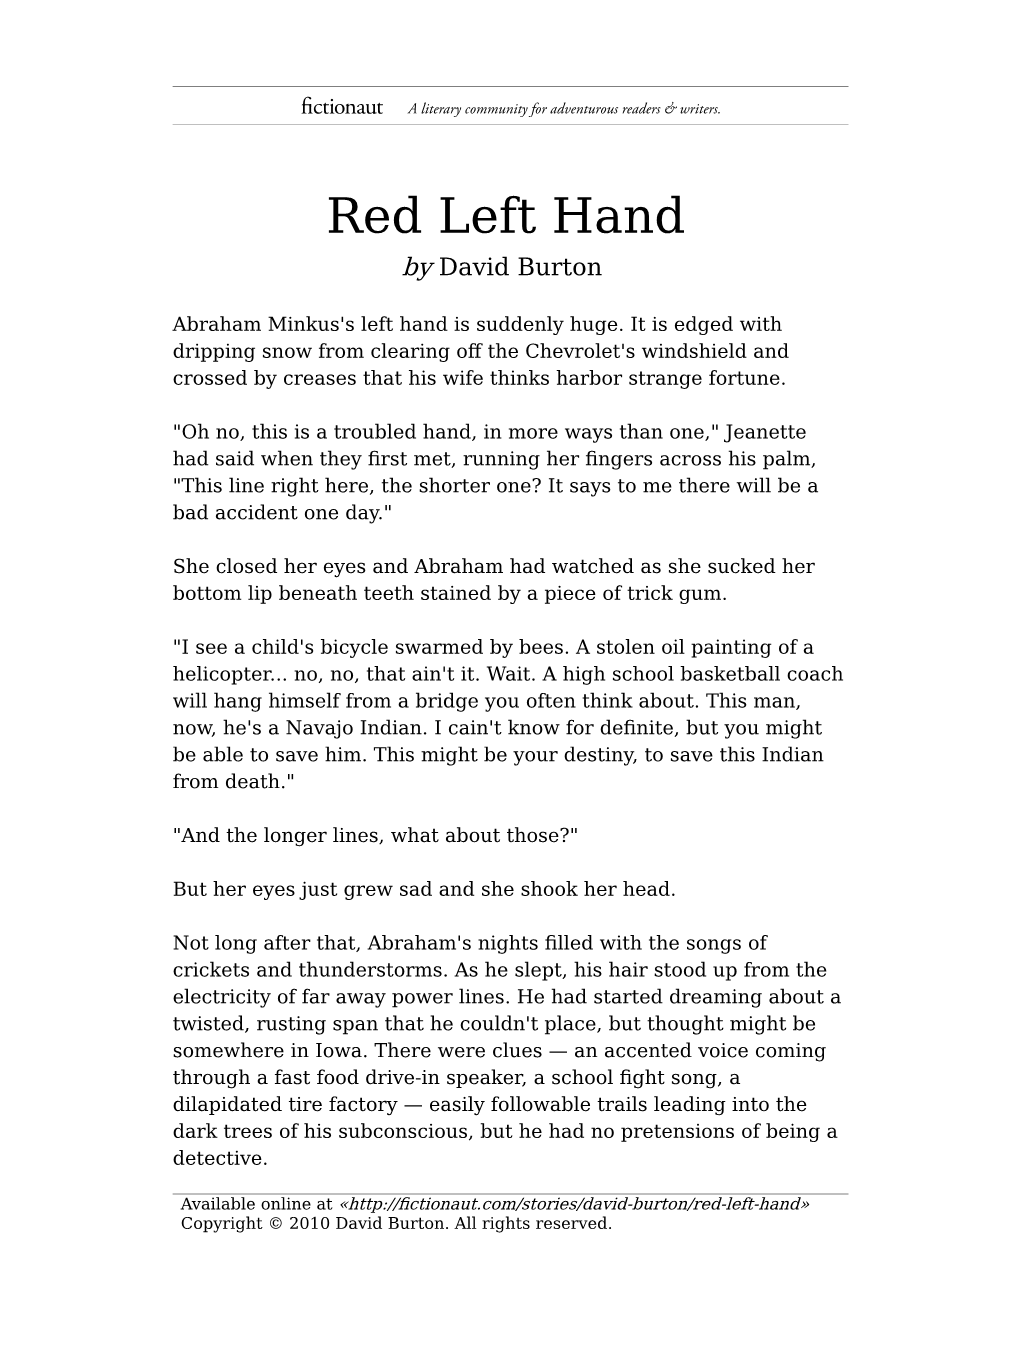 Red Left Hand by David Burton